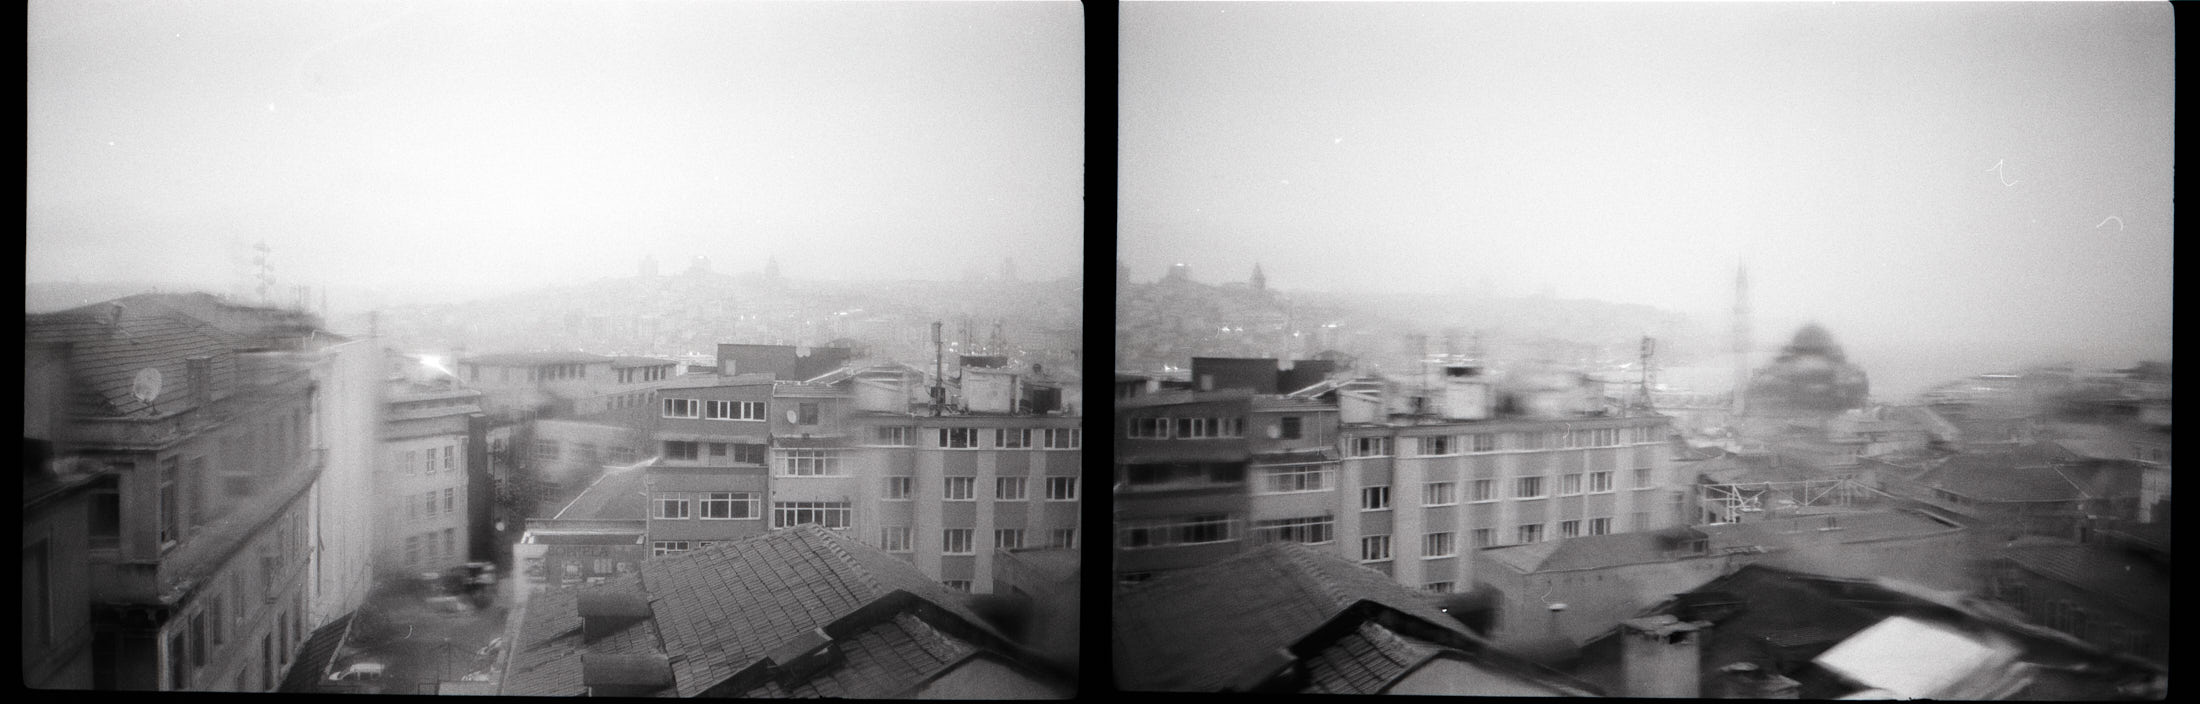 landscape photography photographer brussels Bruxelles belgium photographe Istanbul b&w black and white analog photography